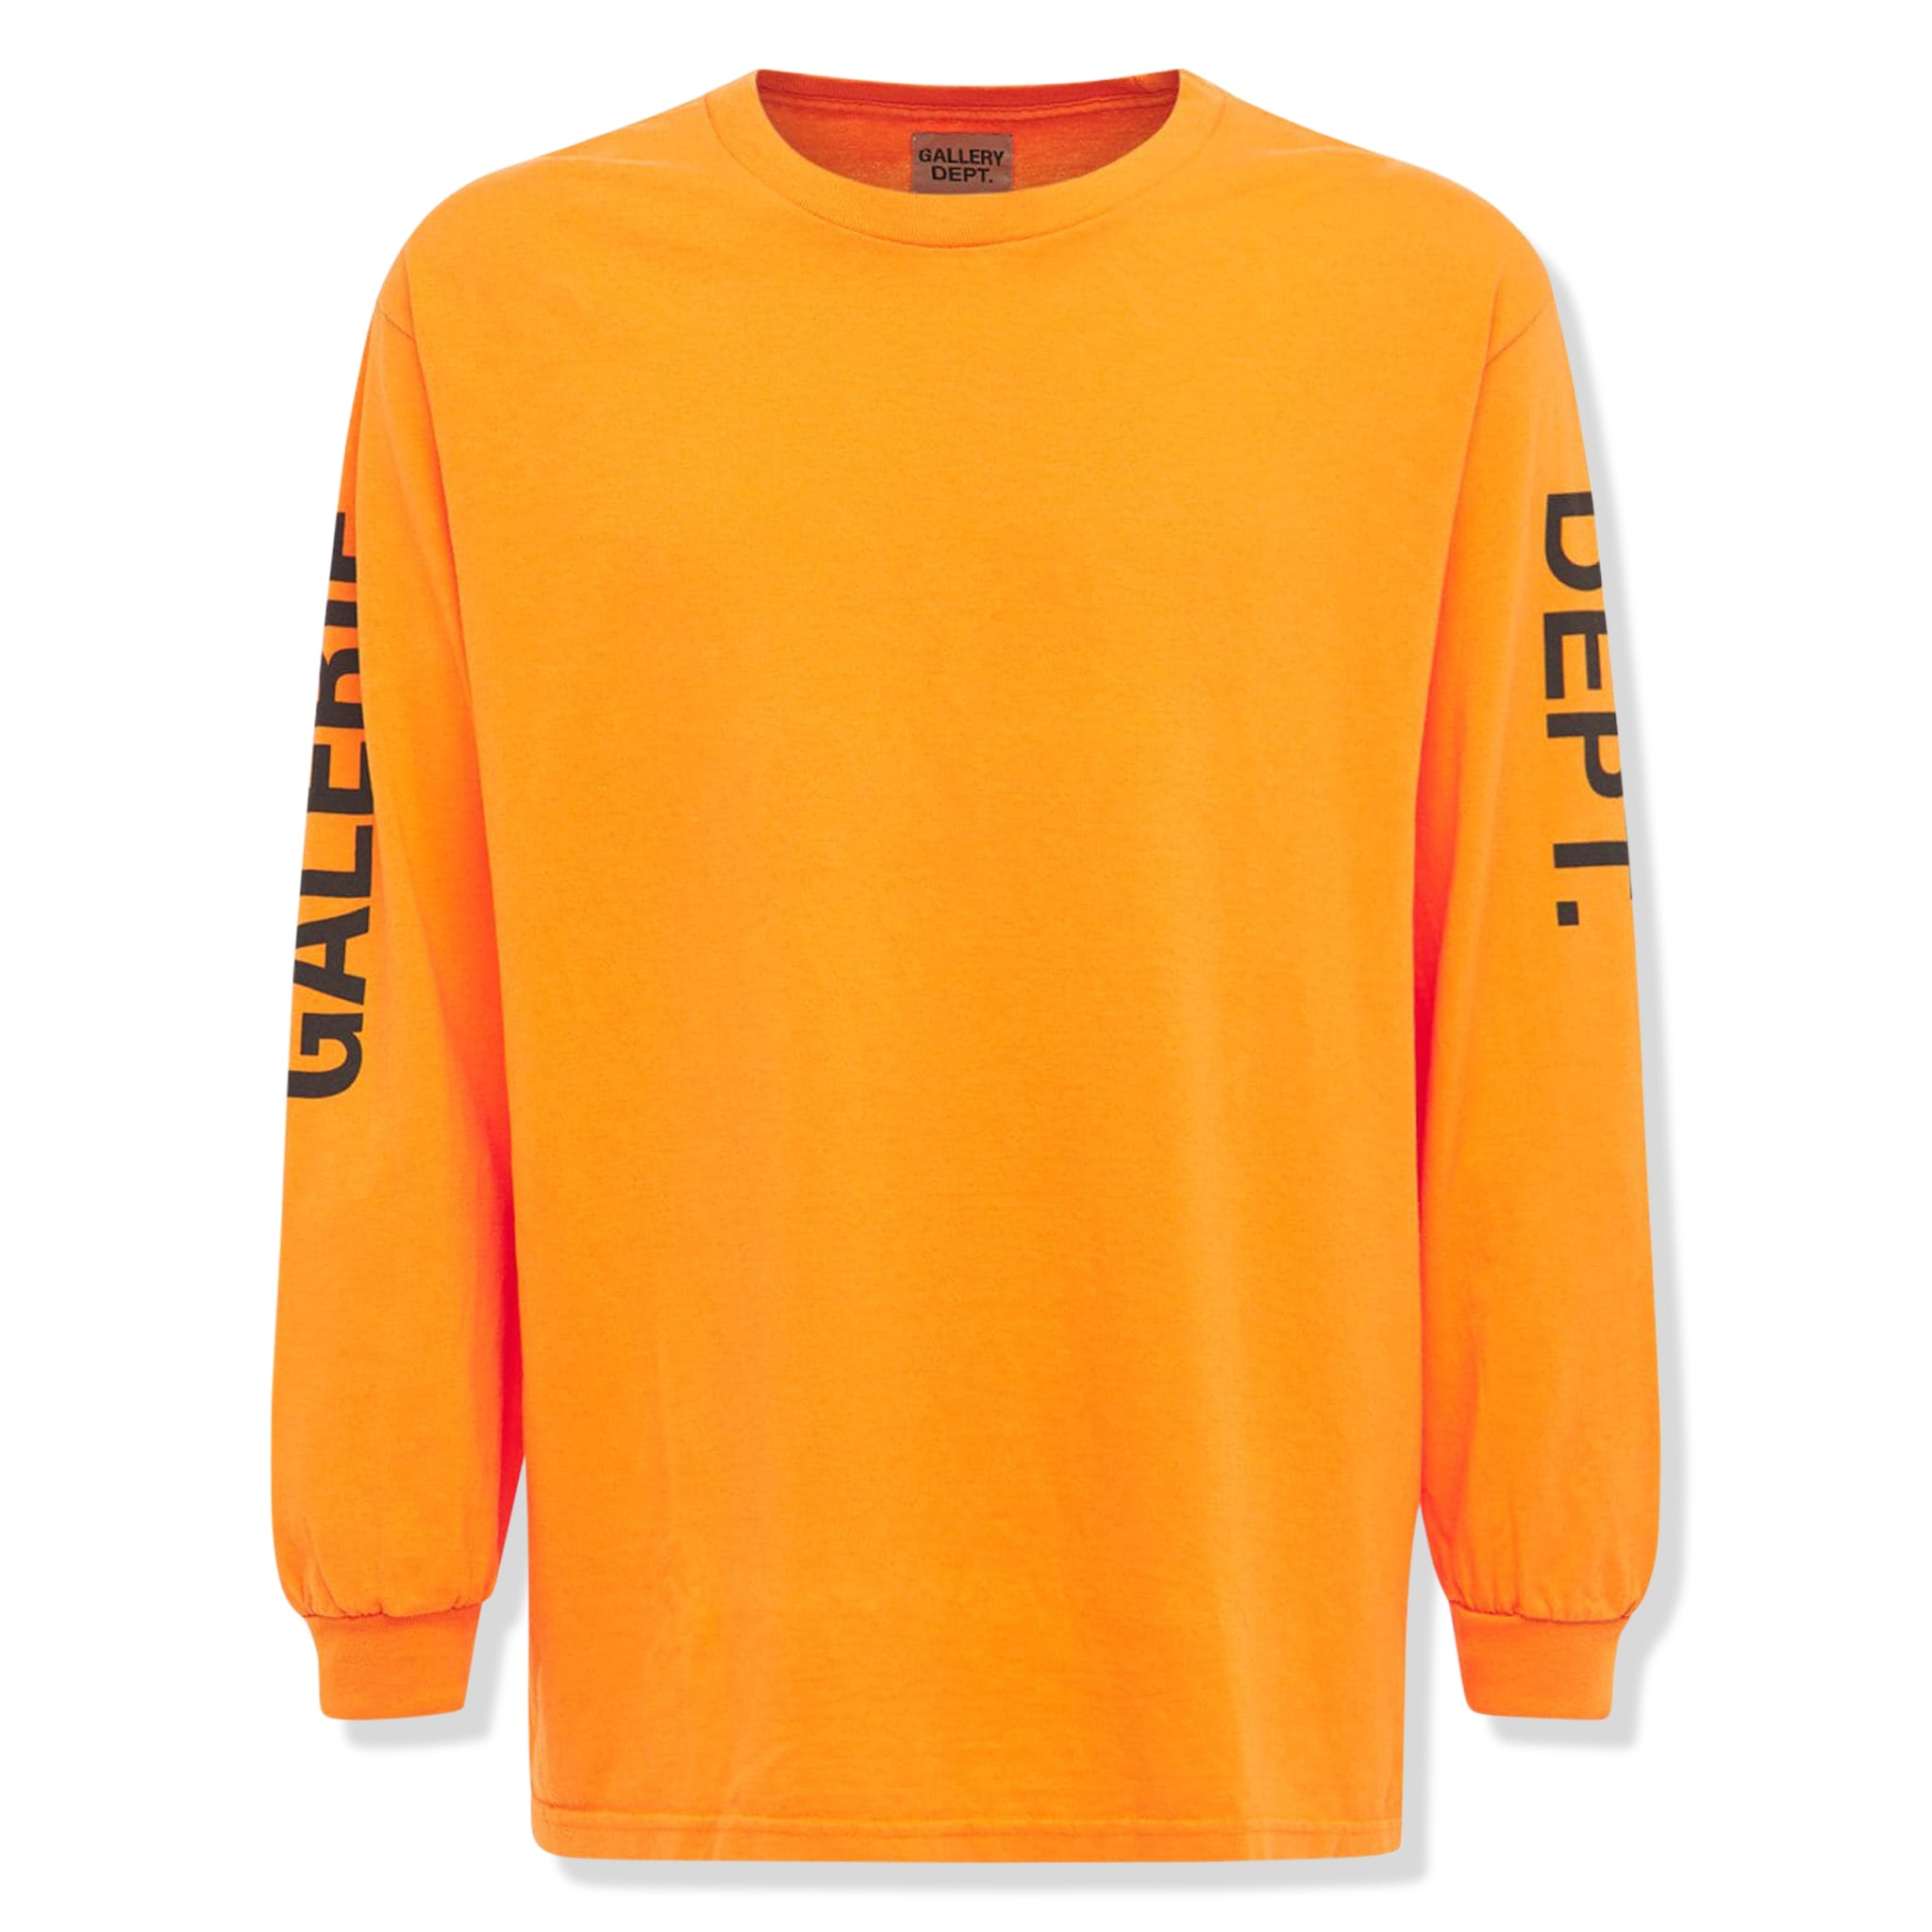 Gallery Dept. Logo Printed Jersey L/S Orange T Shirt – Crepslocker